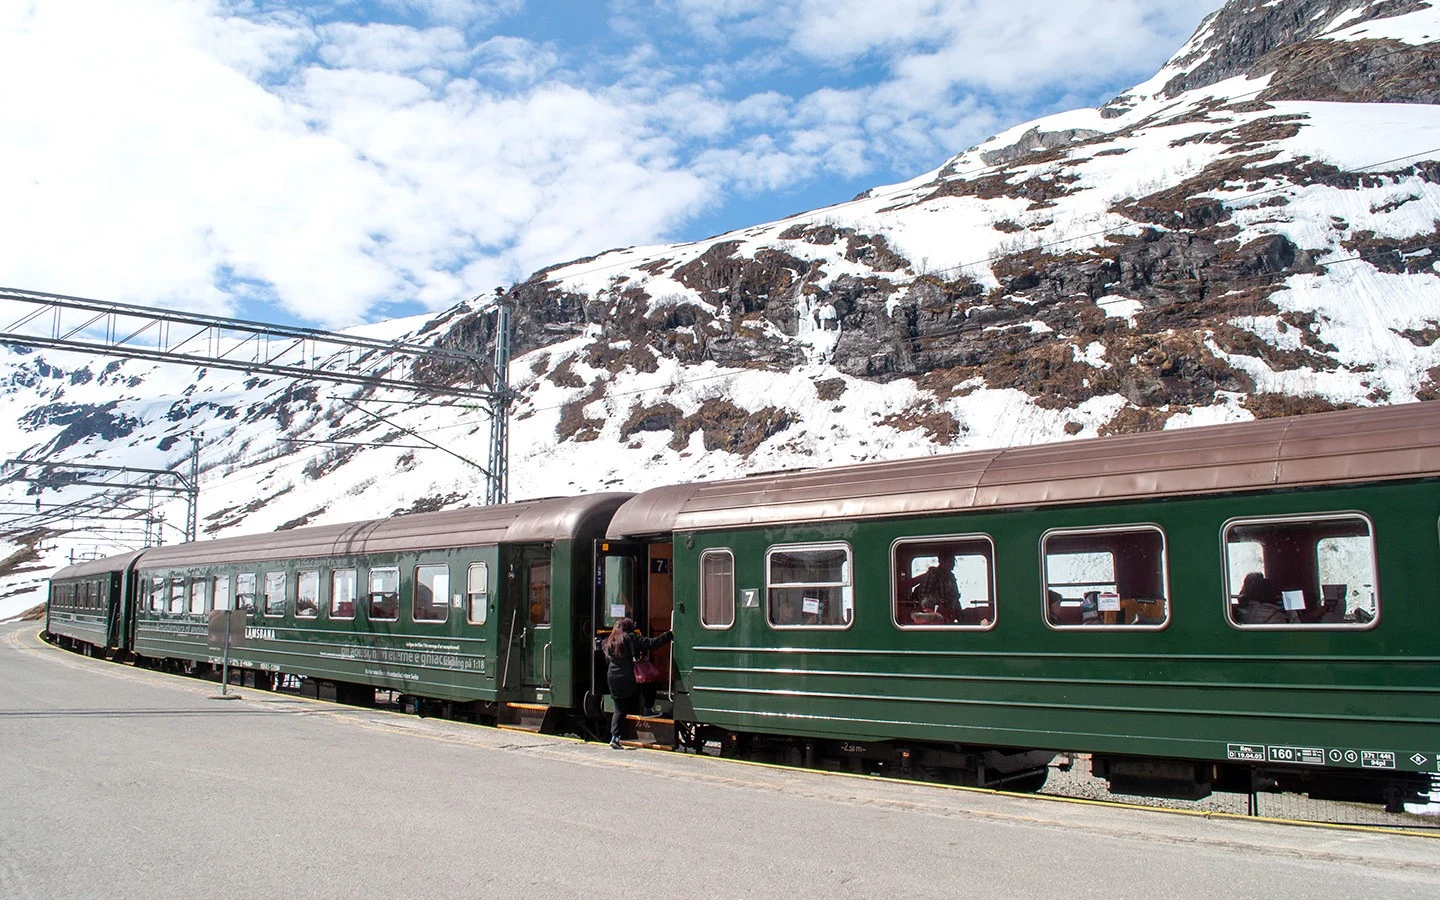 A European rail trip on the Flamsbana scenic train in Norway